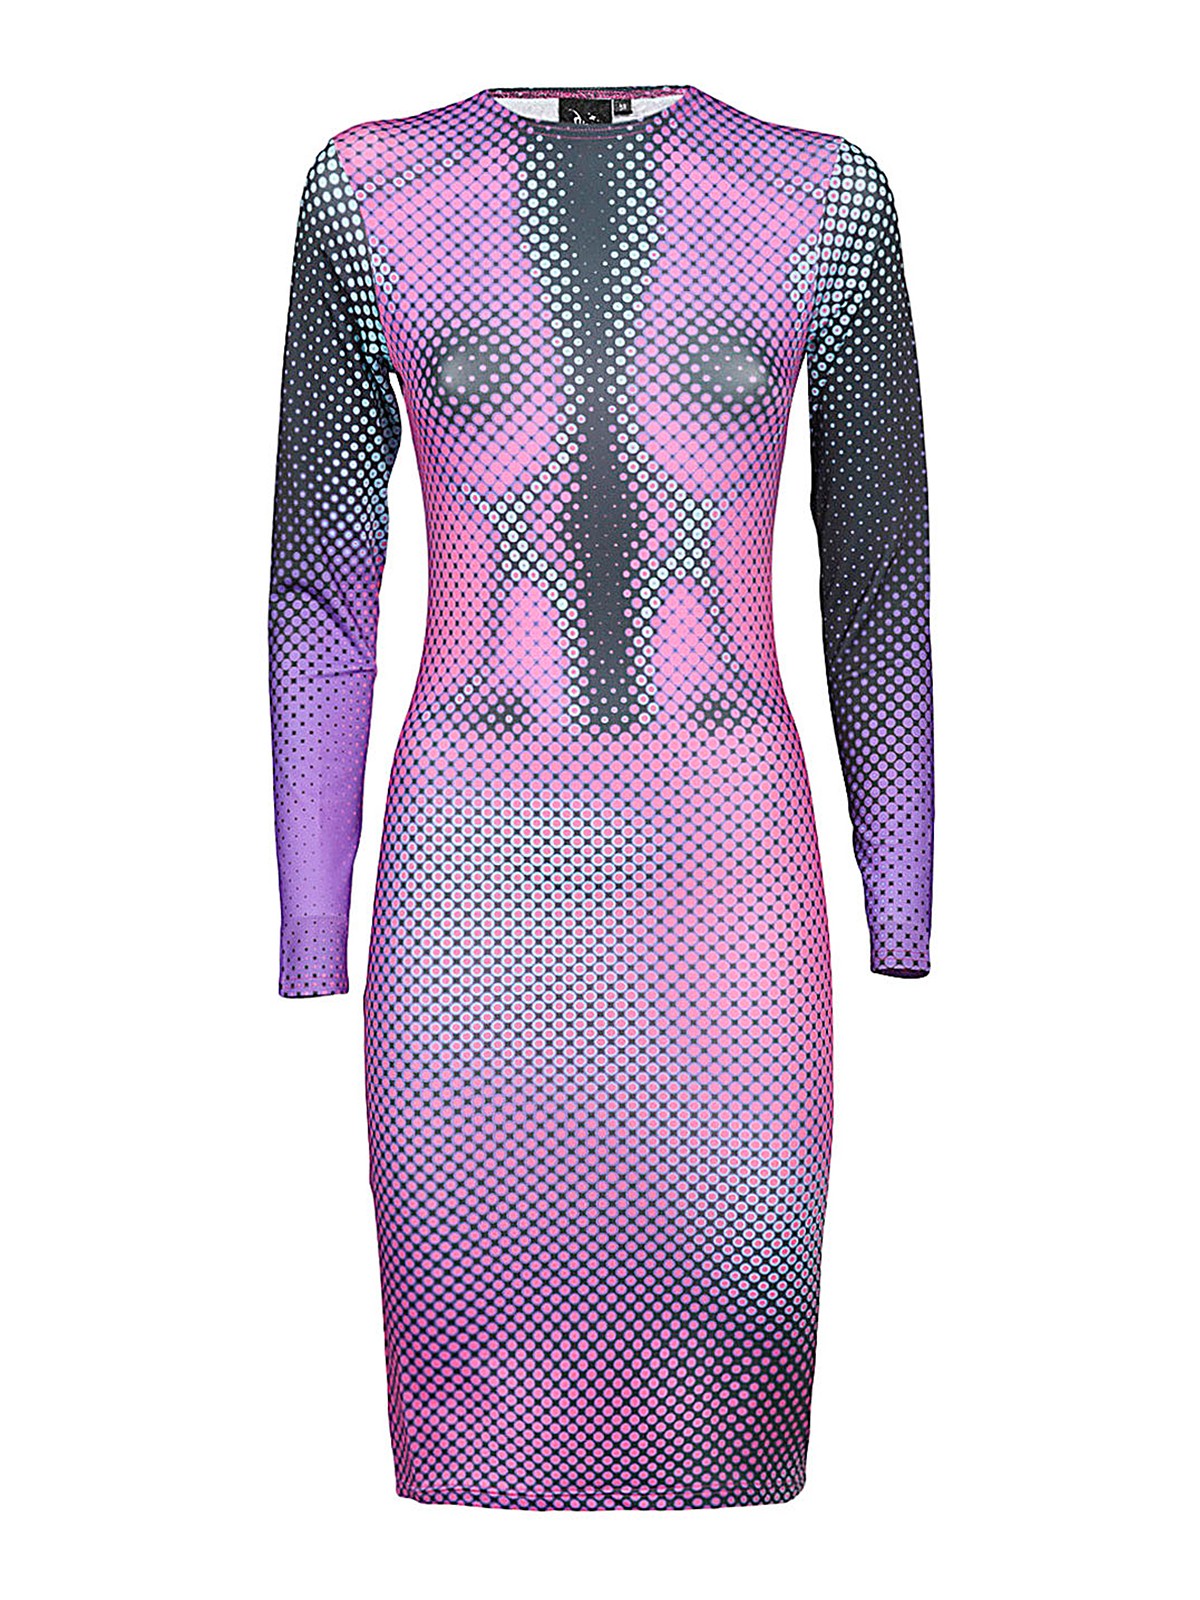 Sinead Gorey Digitally Print Fitted Short Dress In Nude & Neutrals